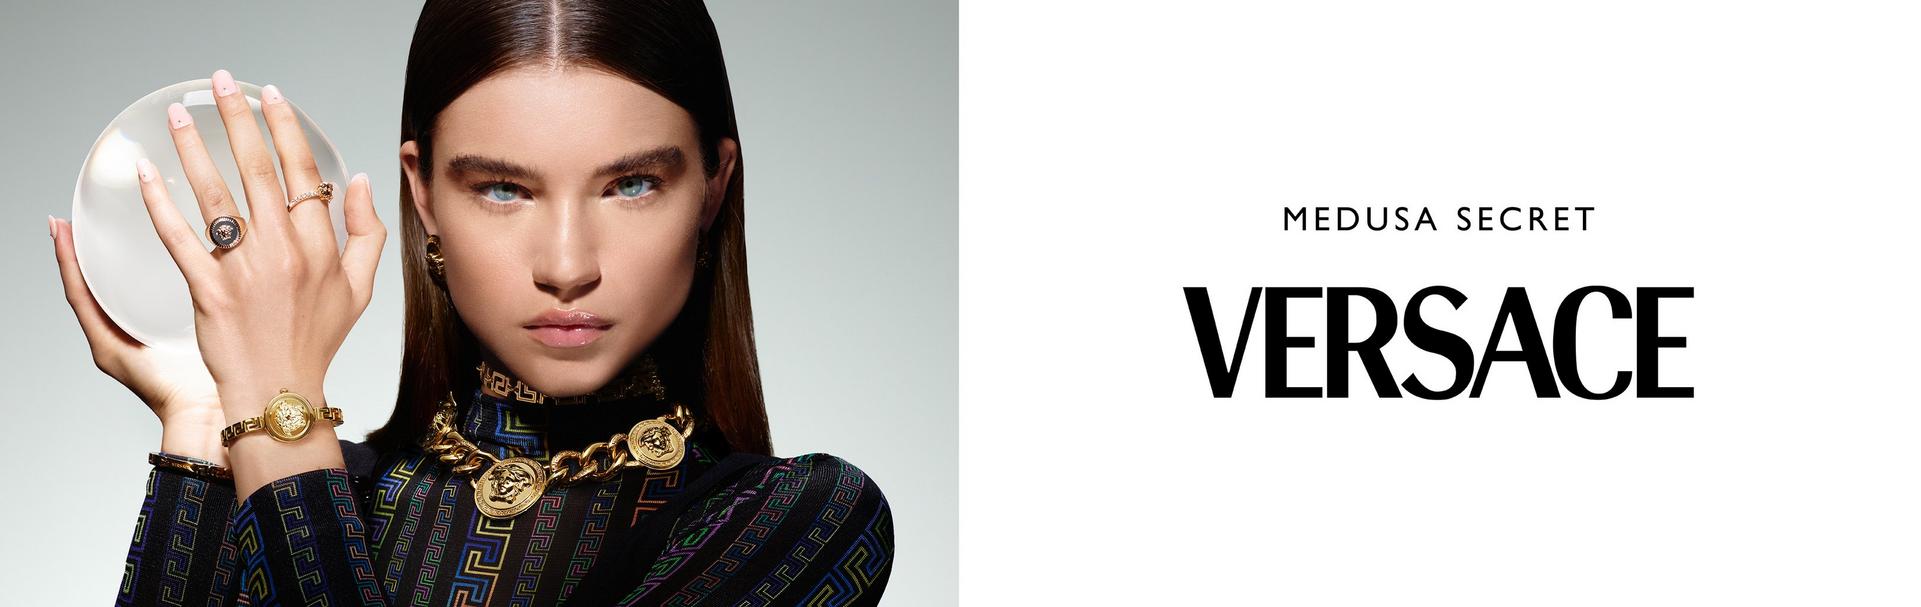 Shop beautiful Versace watches online at Ernest Jones.